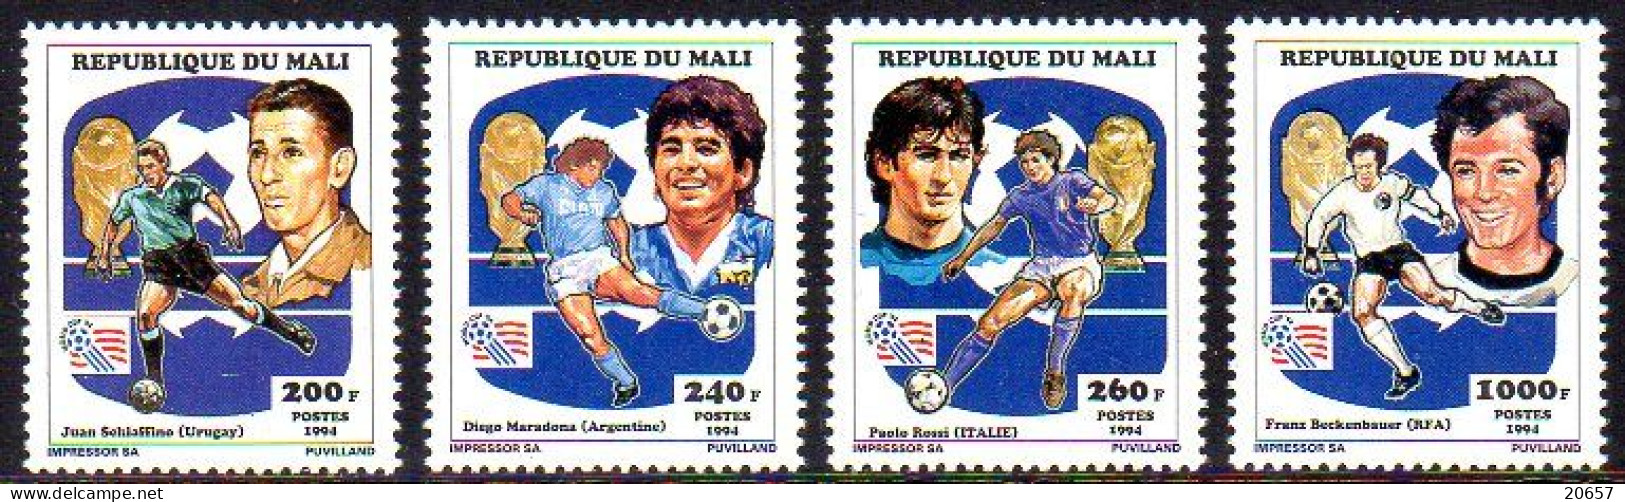 Mali 0602/05 Mondial Football USA 94, Joueurs Uruguay, Argentina, Italia, Germany - 1994 – Estados Unidos